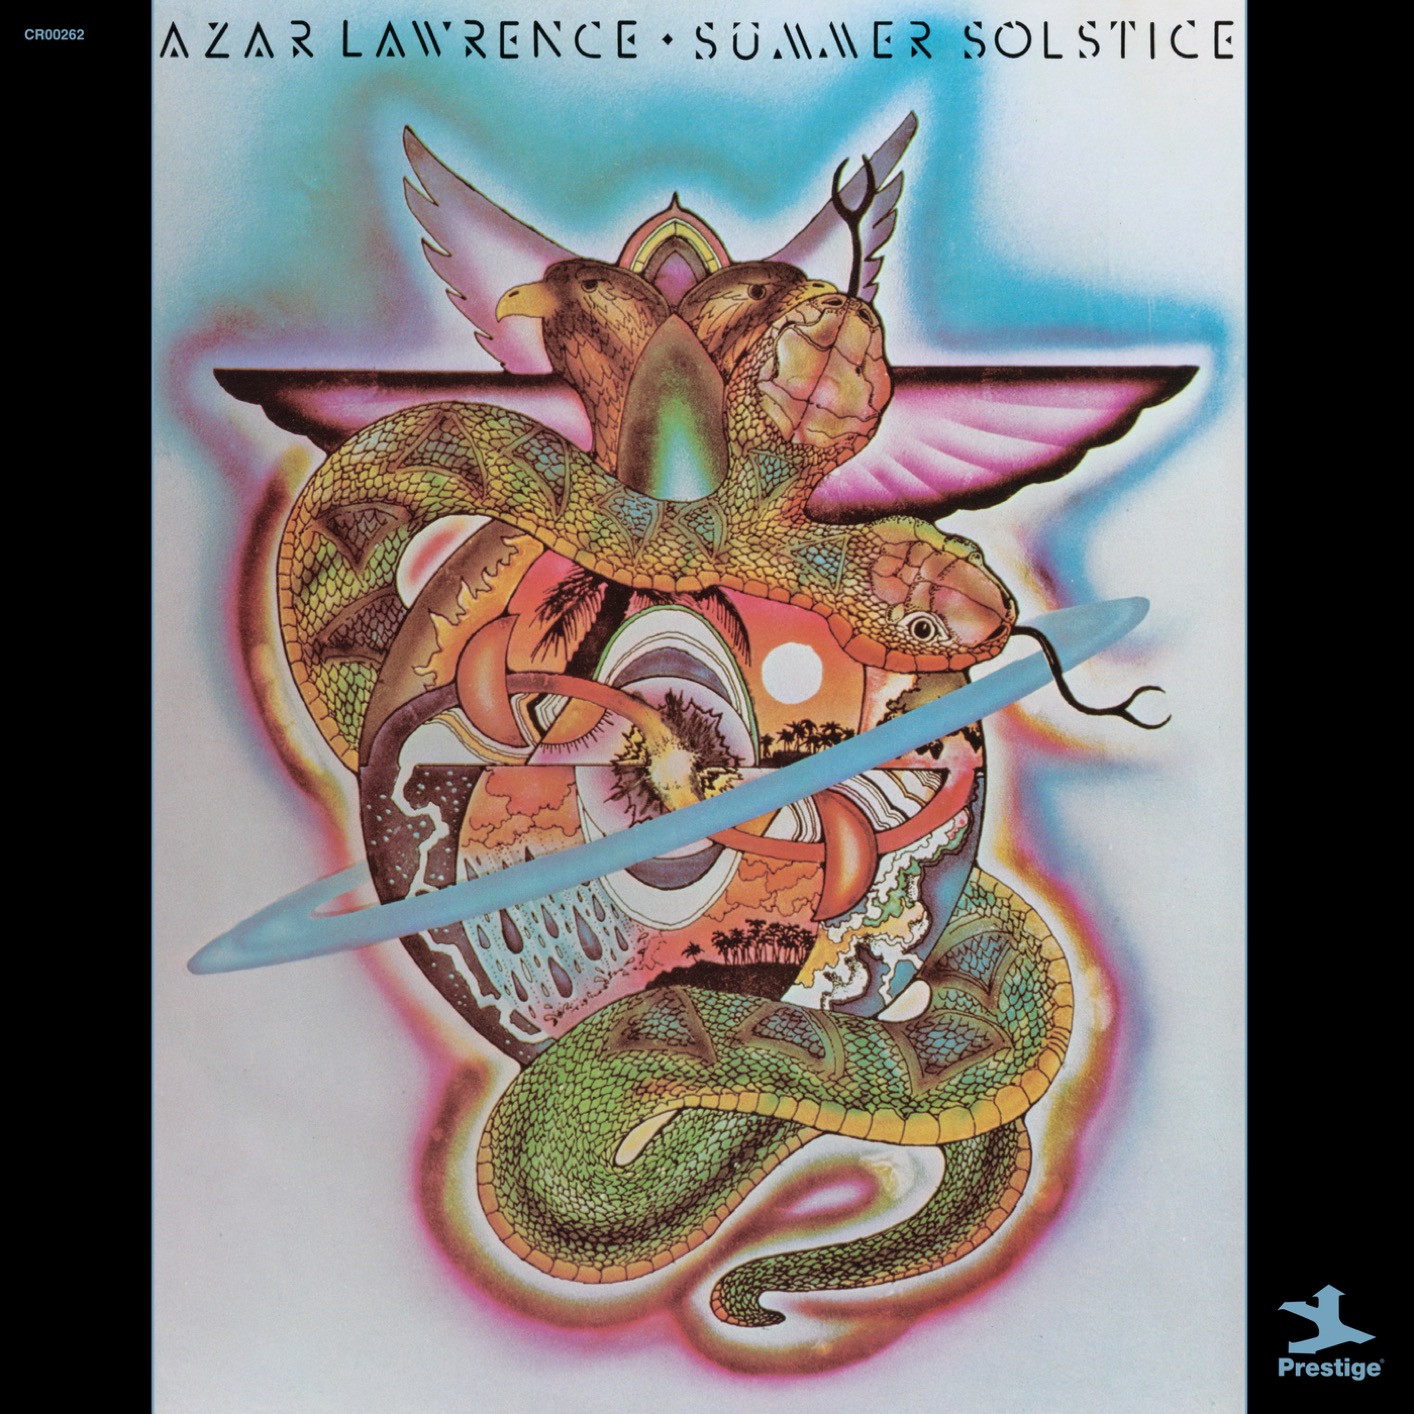 Azar Lawrence - Summer Solstice (Remastered) (1975/2019) [FLAC 24bit/192kHz]